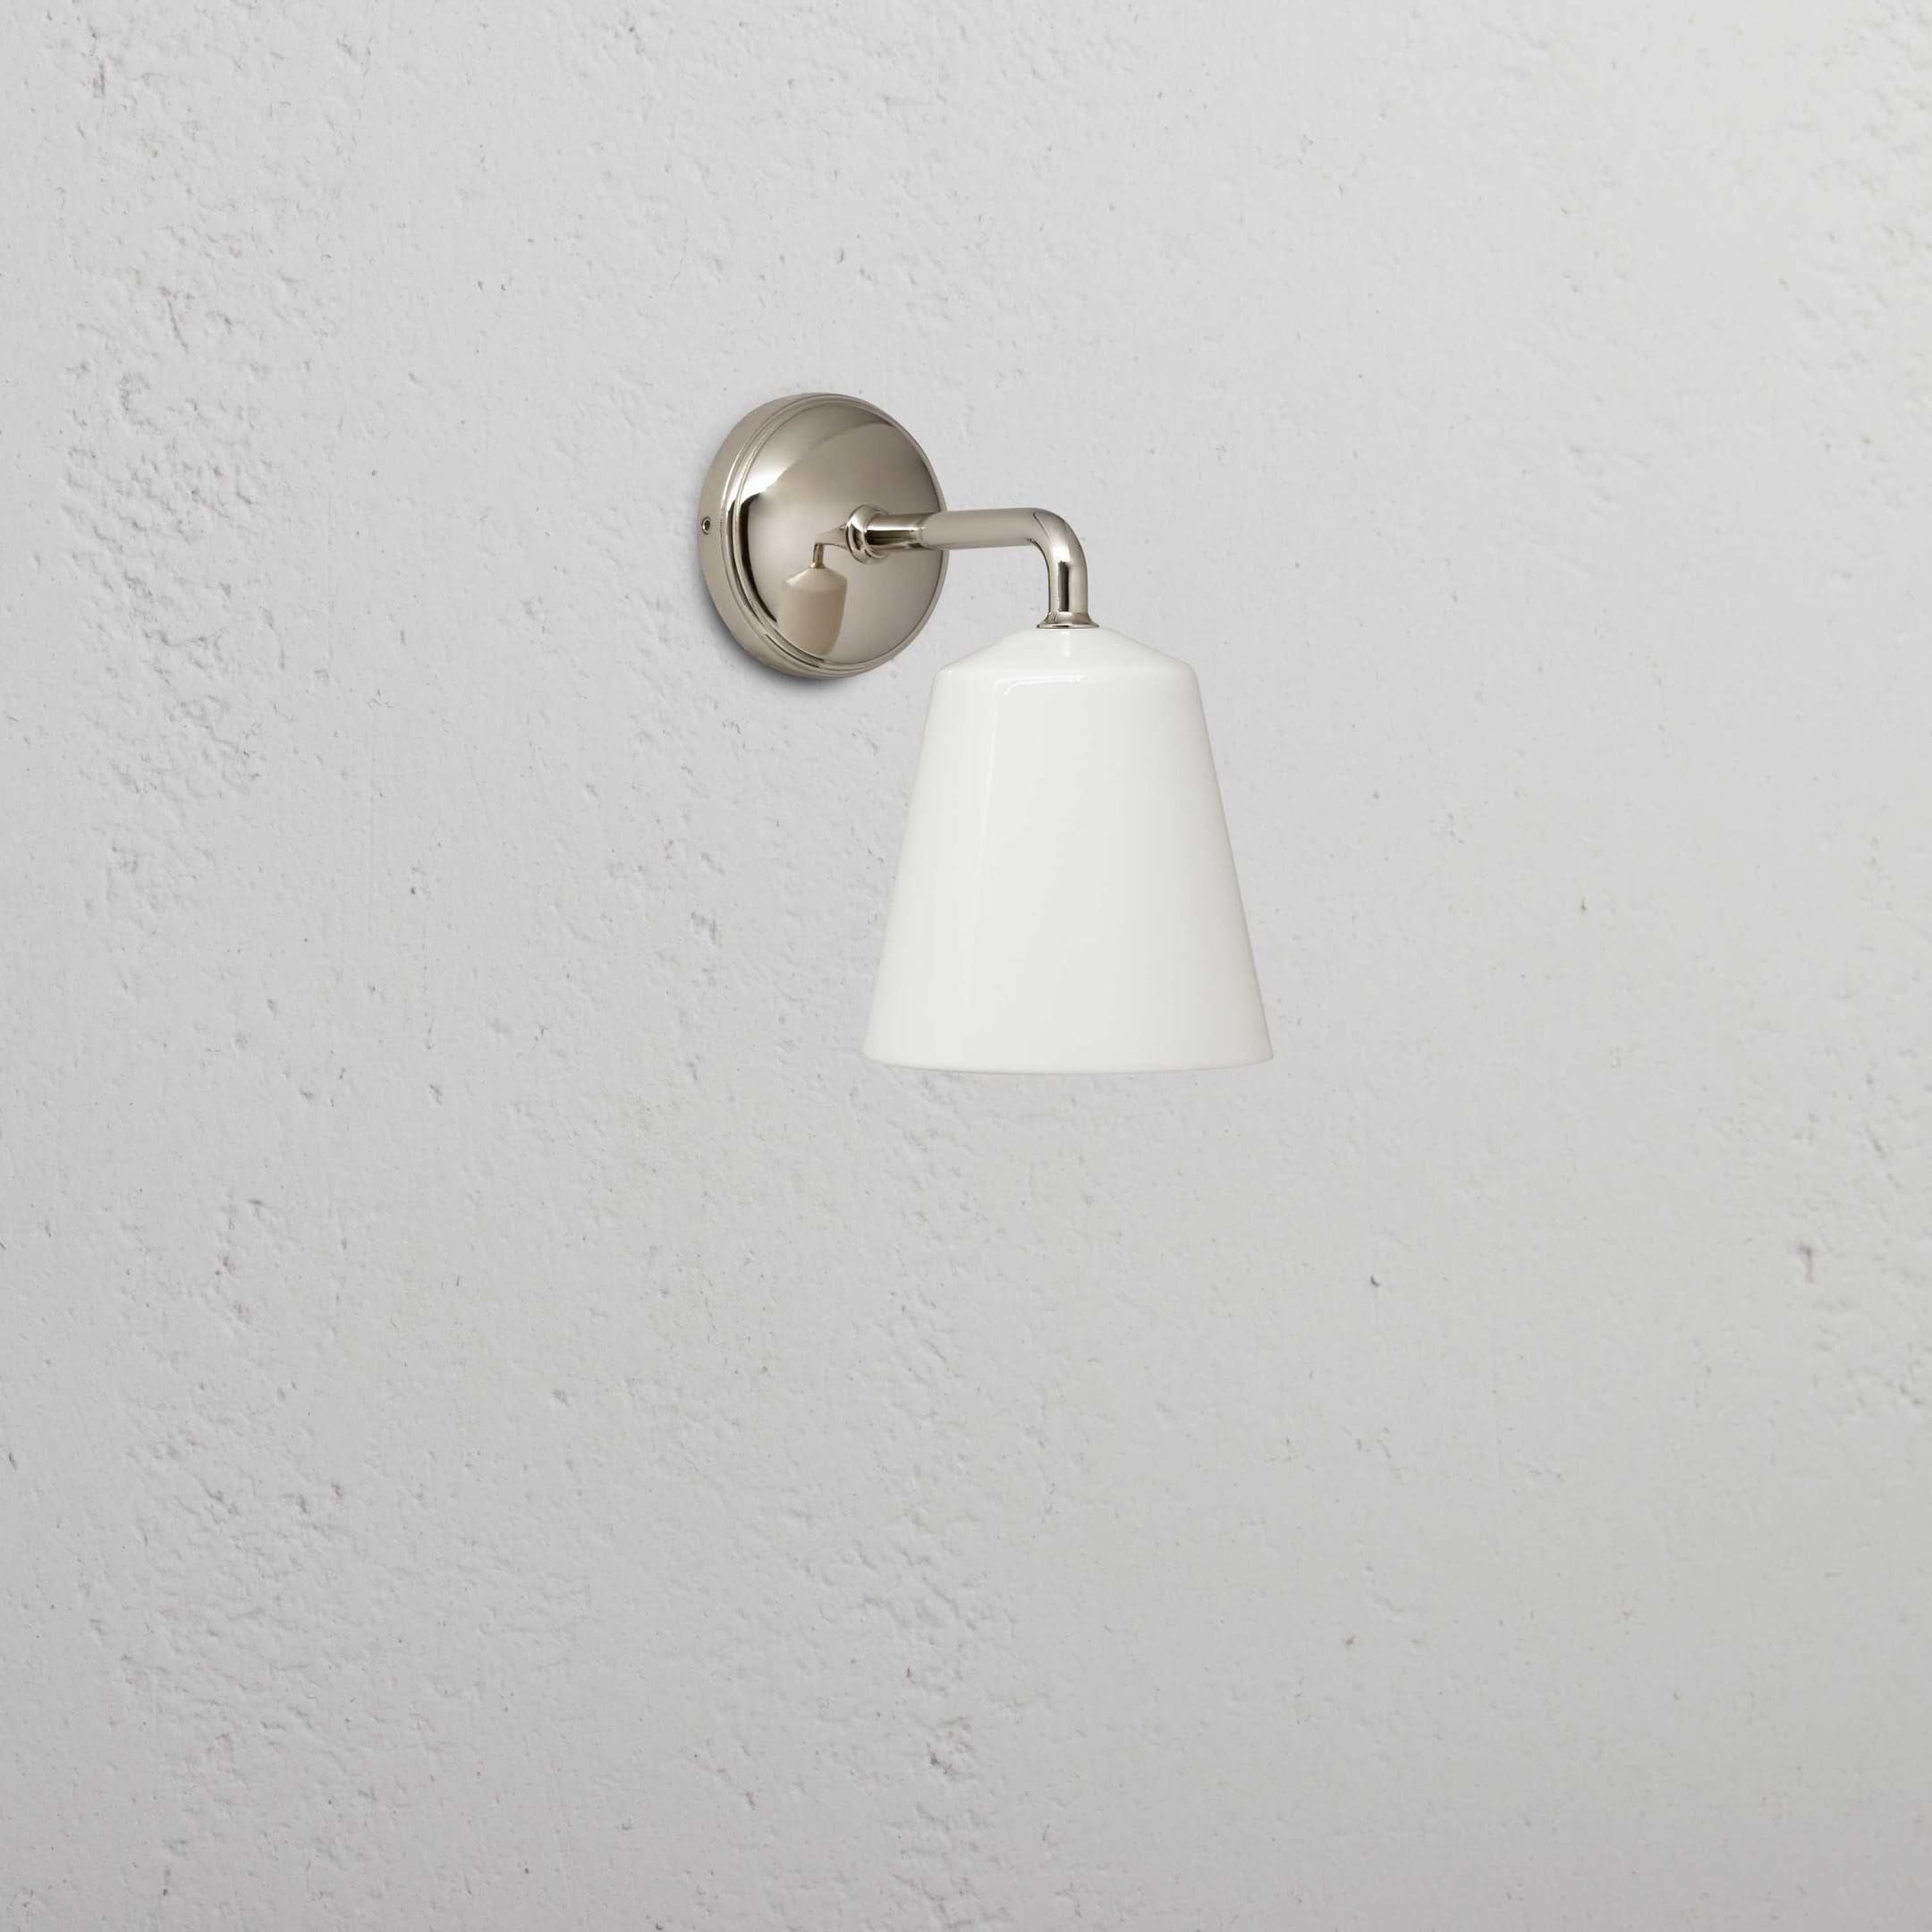 Lampe luxieuse en Porcelaine Fine - Nickel Poli, installée sur un mur